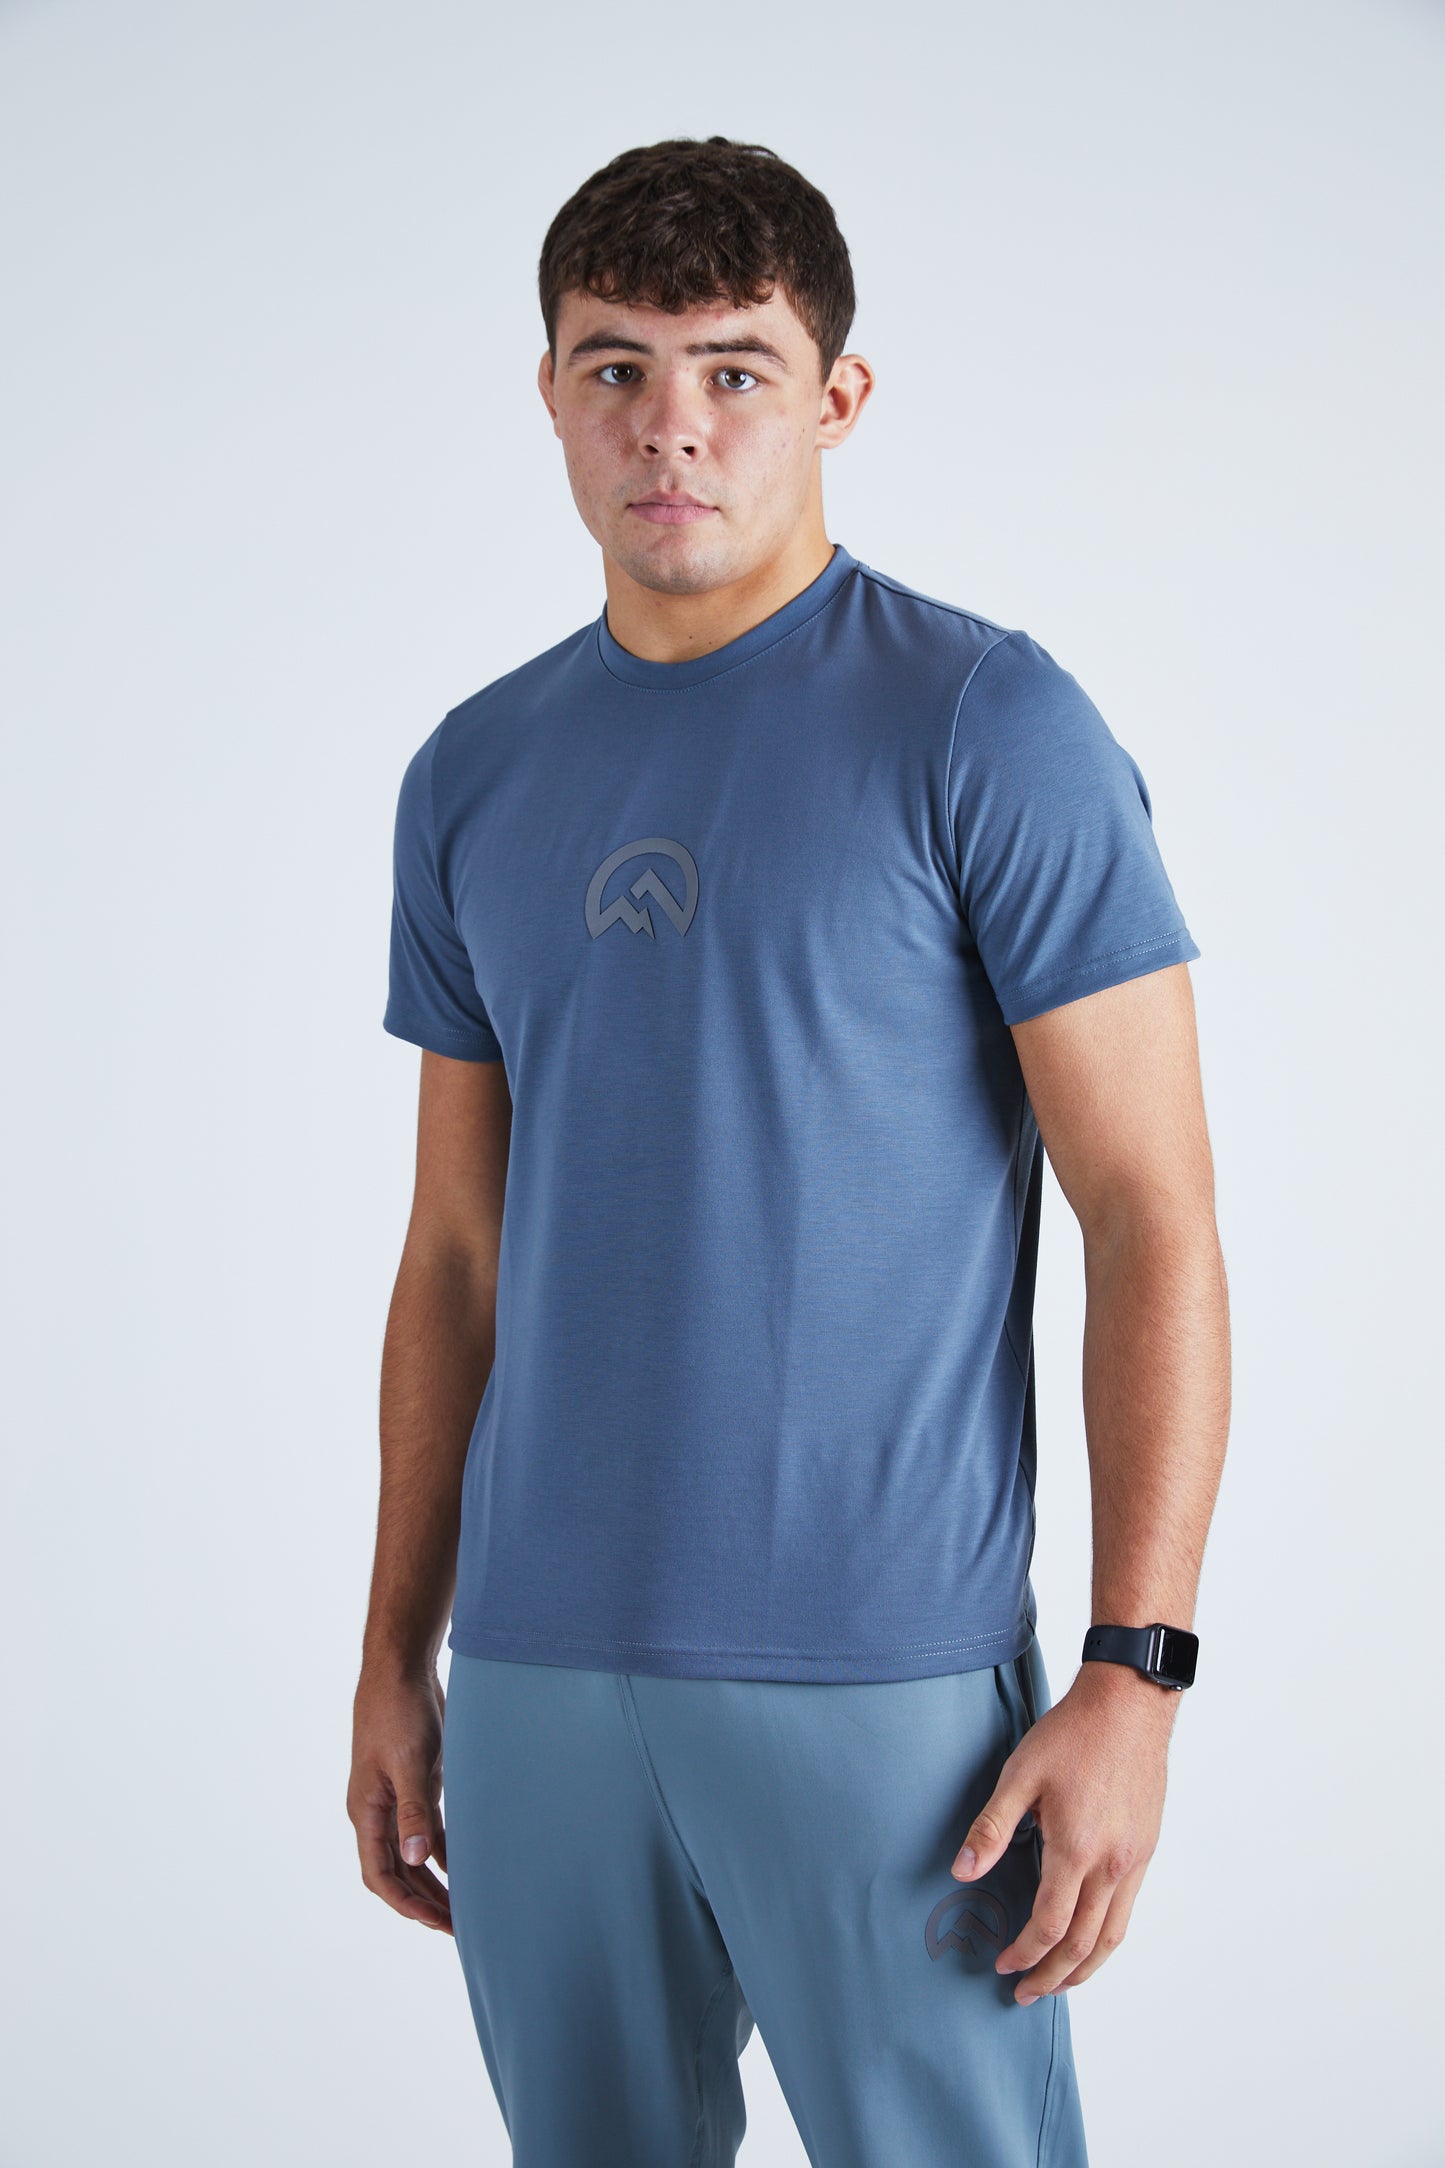 Premium Centre Logo T-Shirt - Graphite Grey